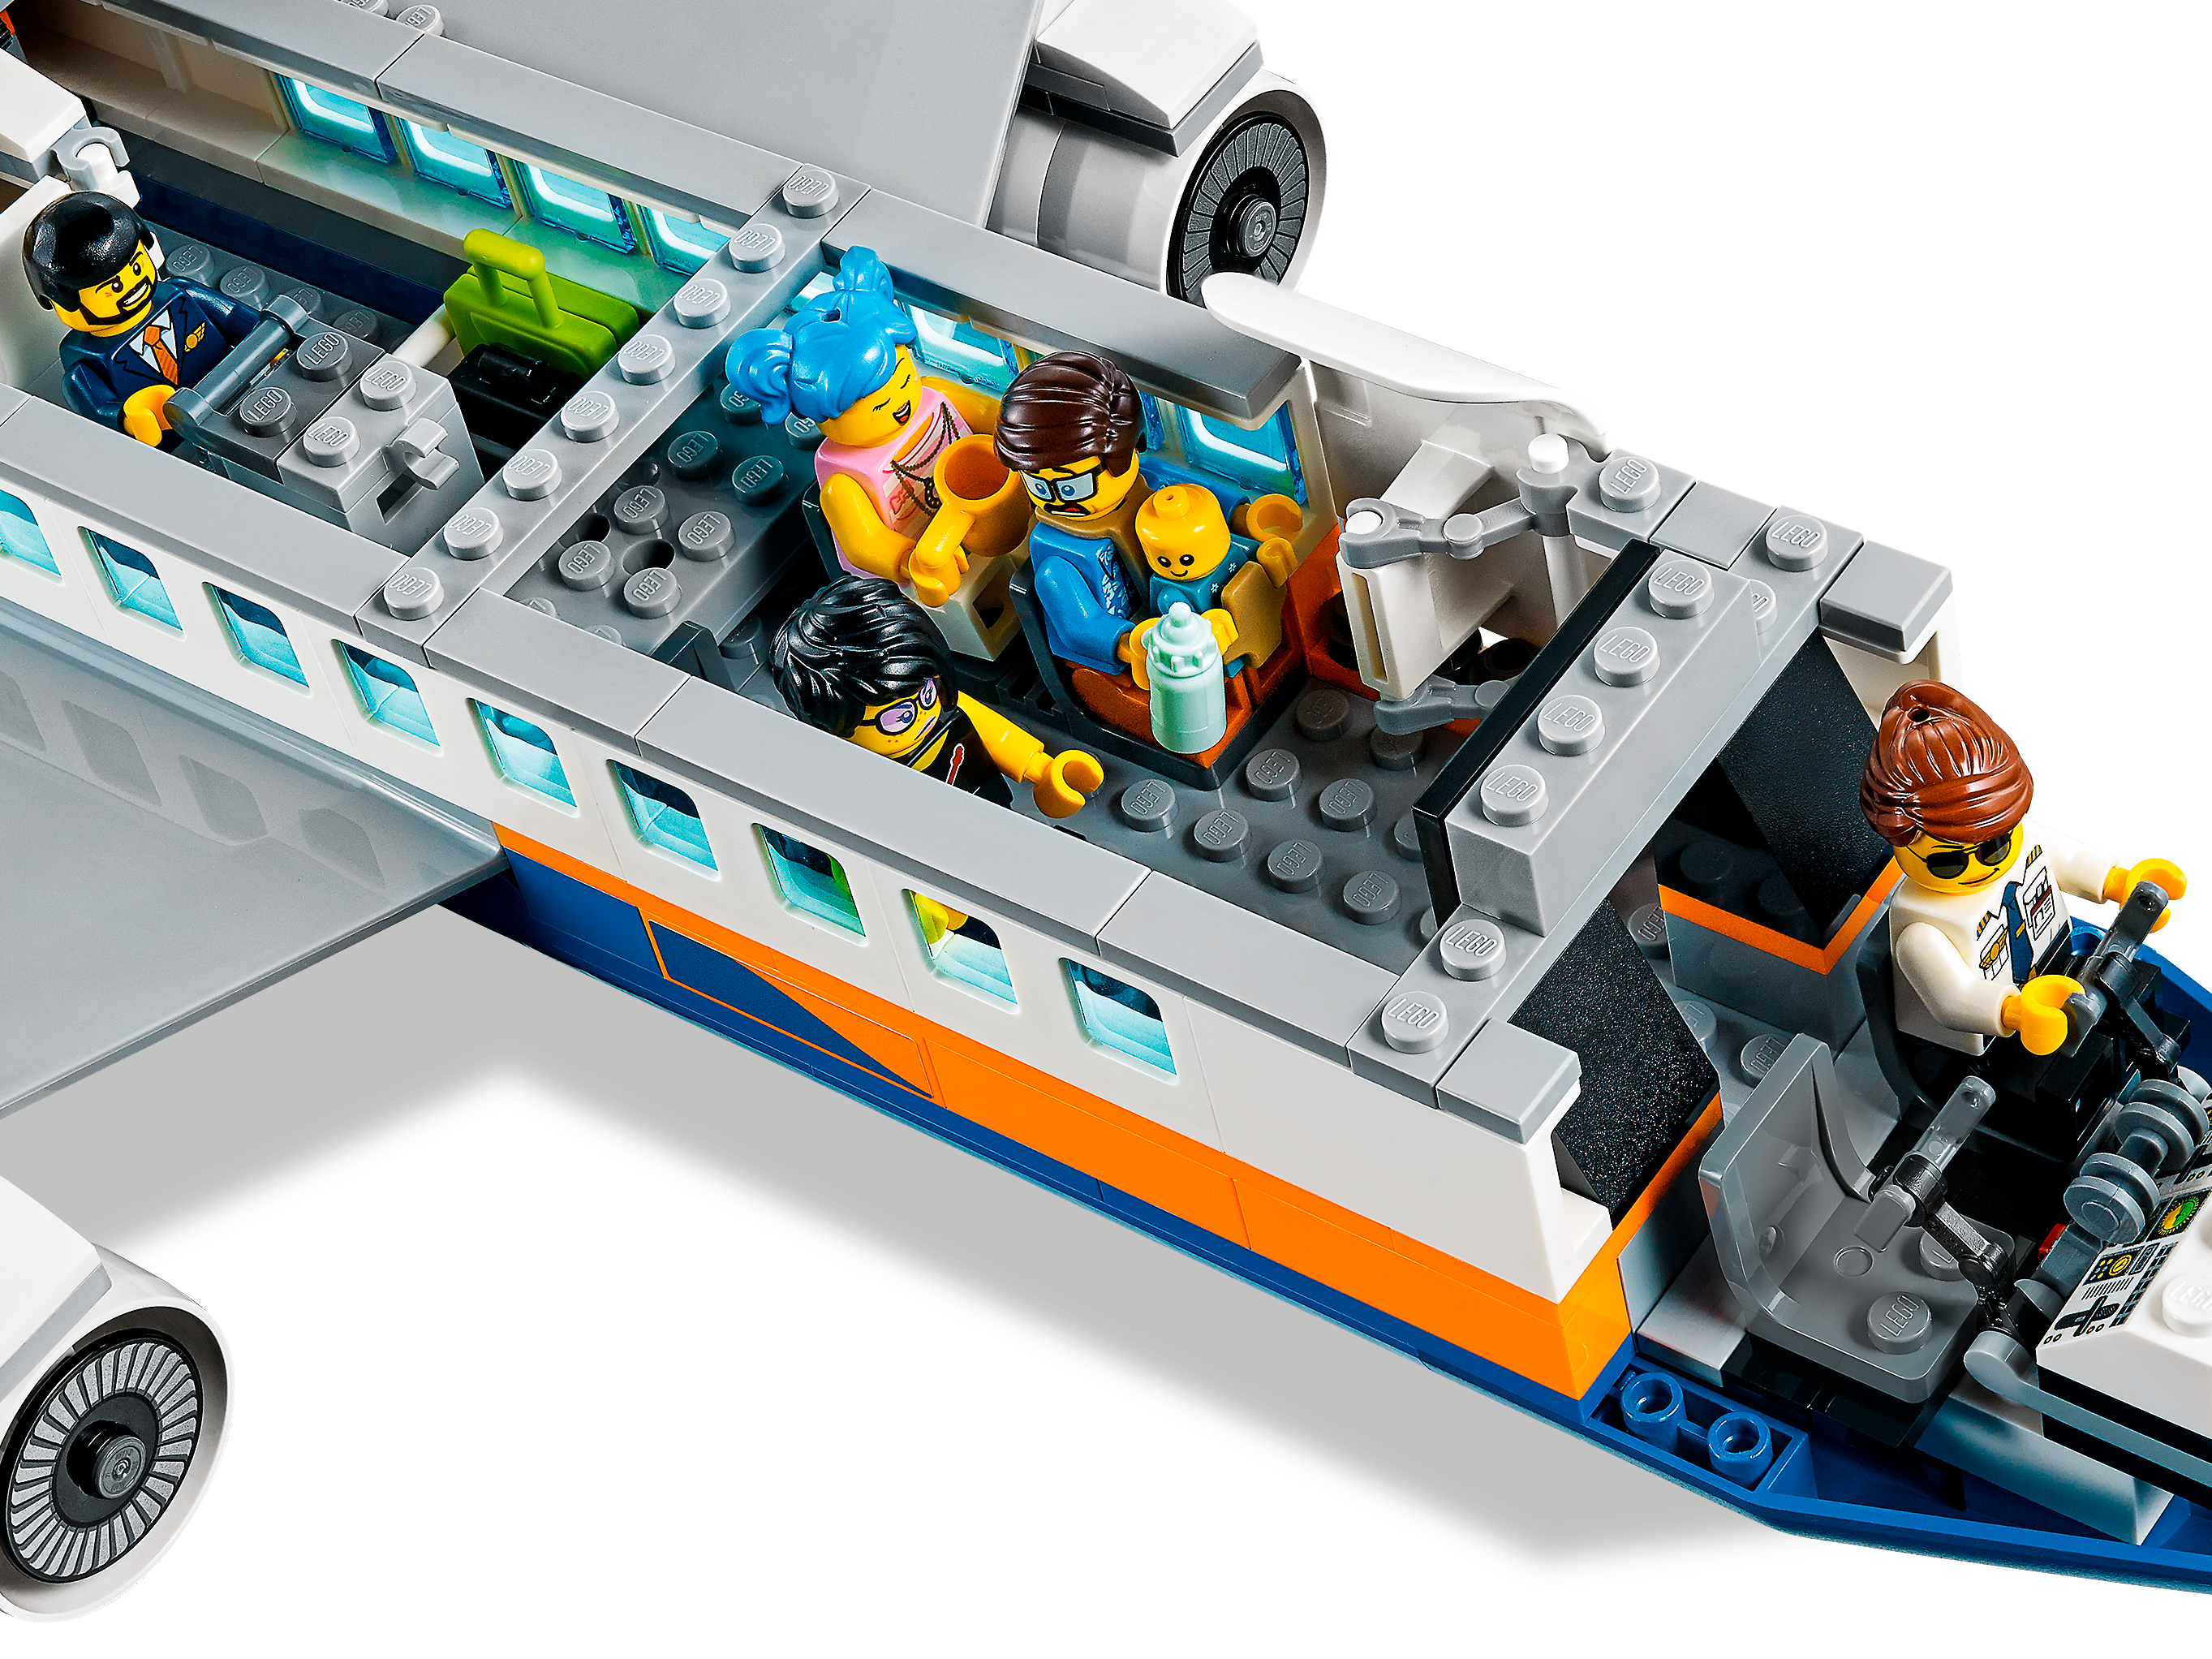 Lego 60262 City Passenger Airplane Building Set 